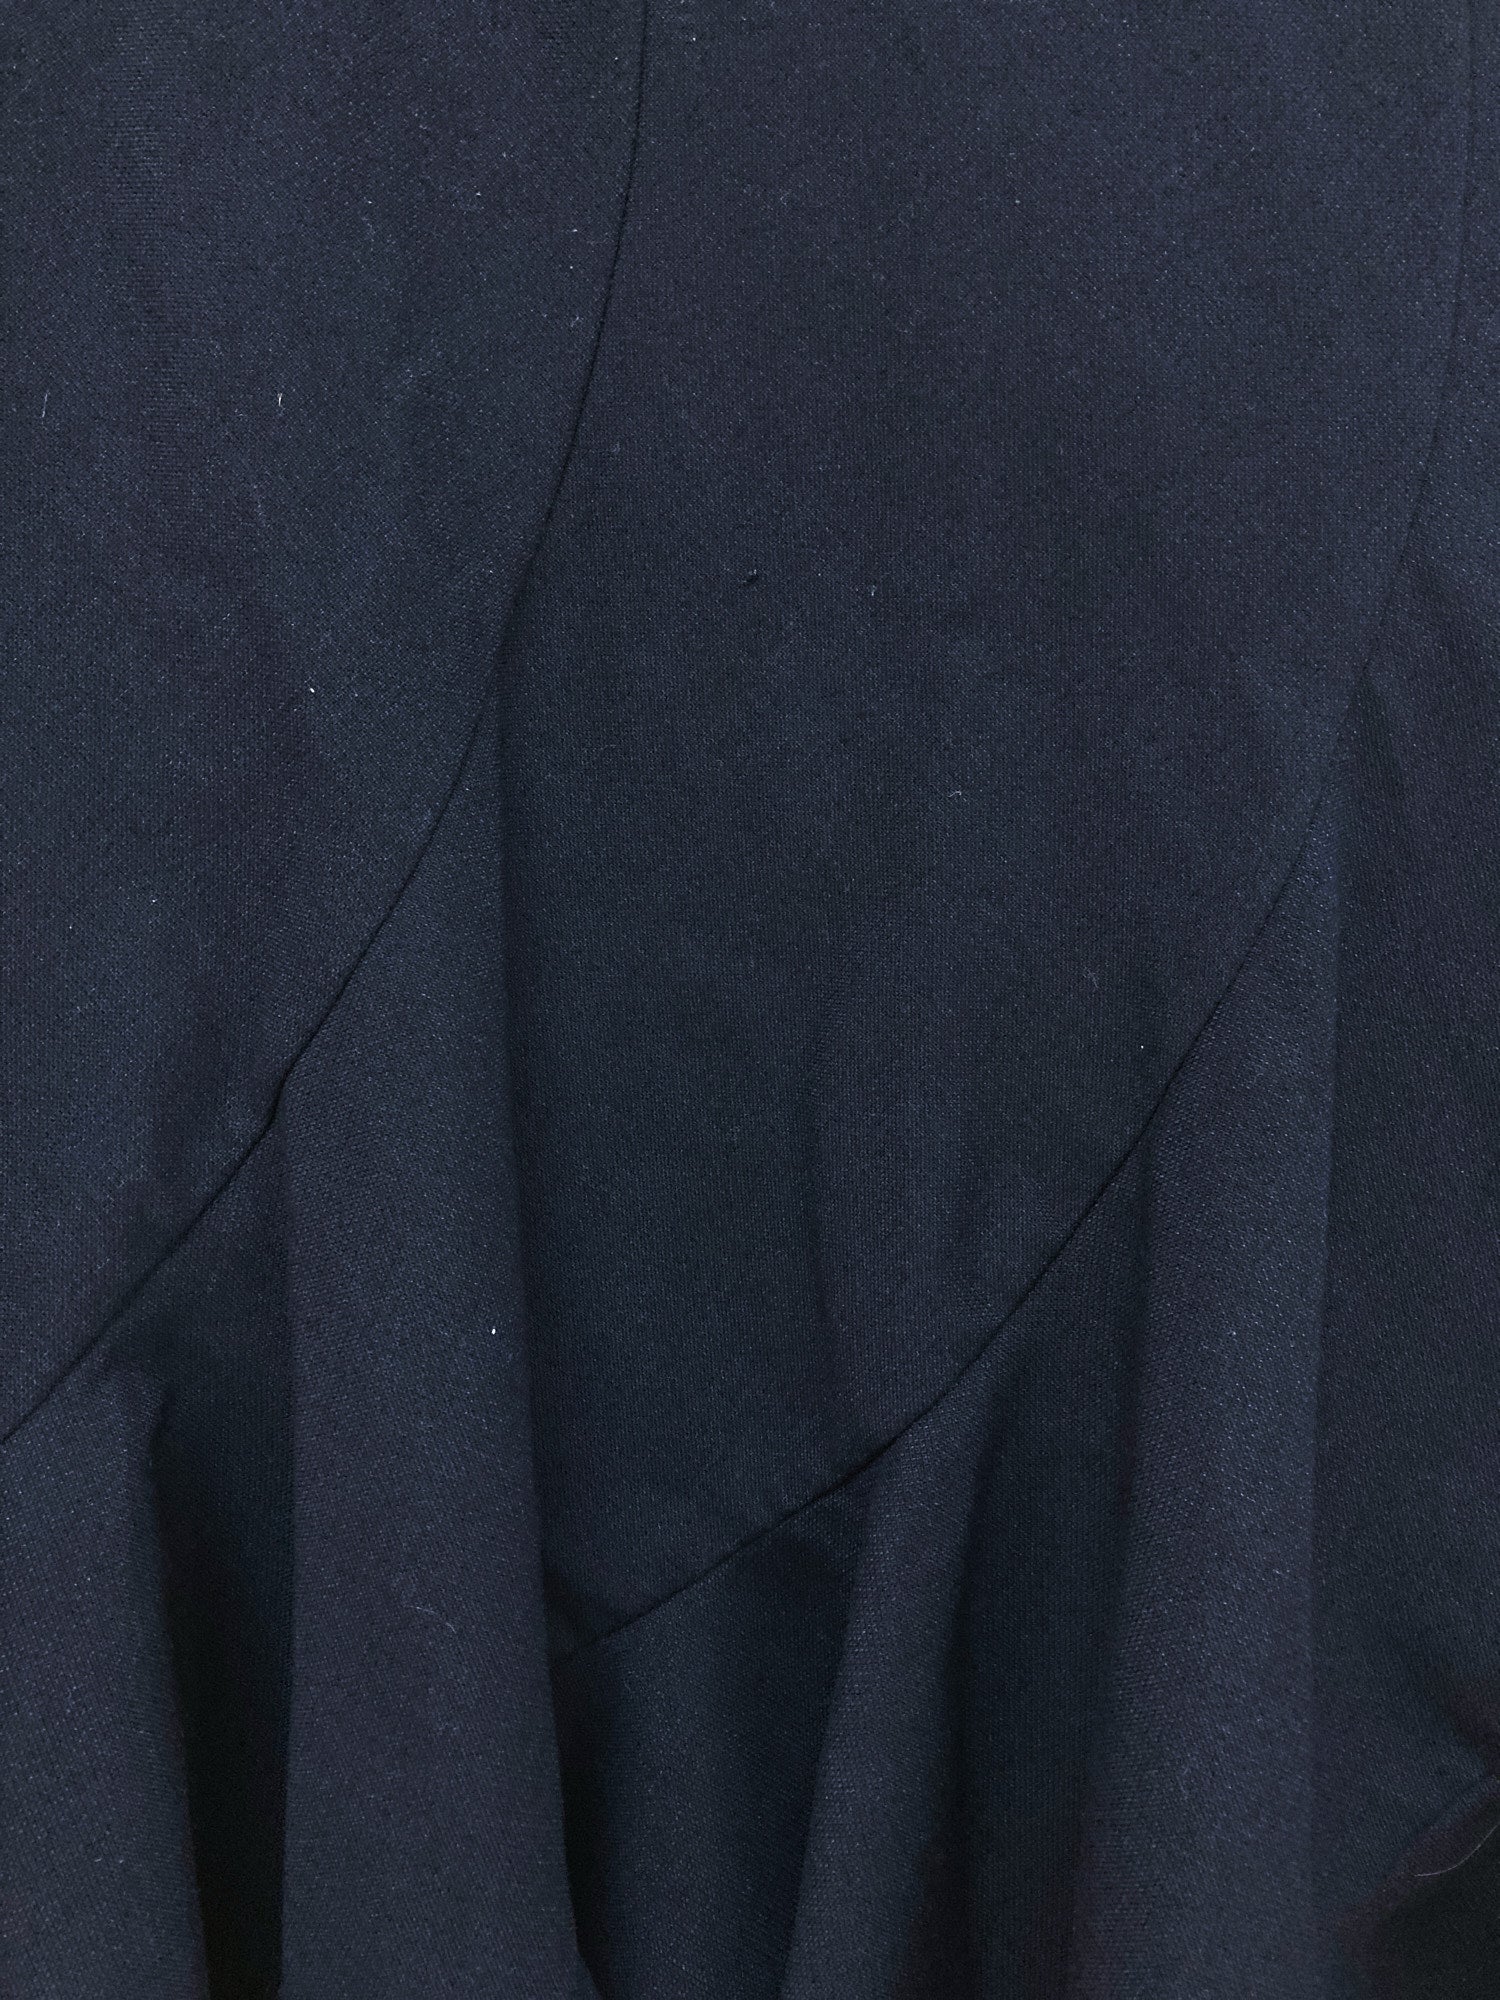 Junya Watanabe Comme des Garcons 2000 dark navy wool poly paneled skirt - M